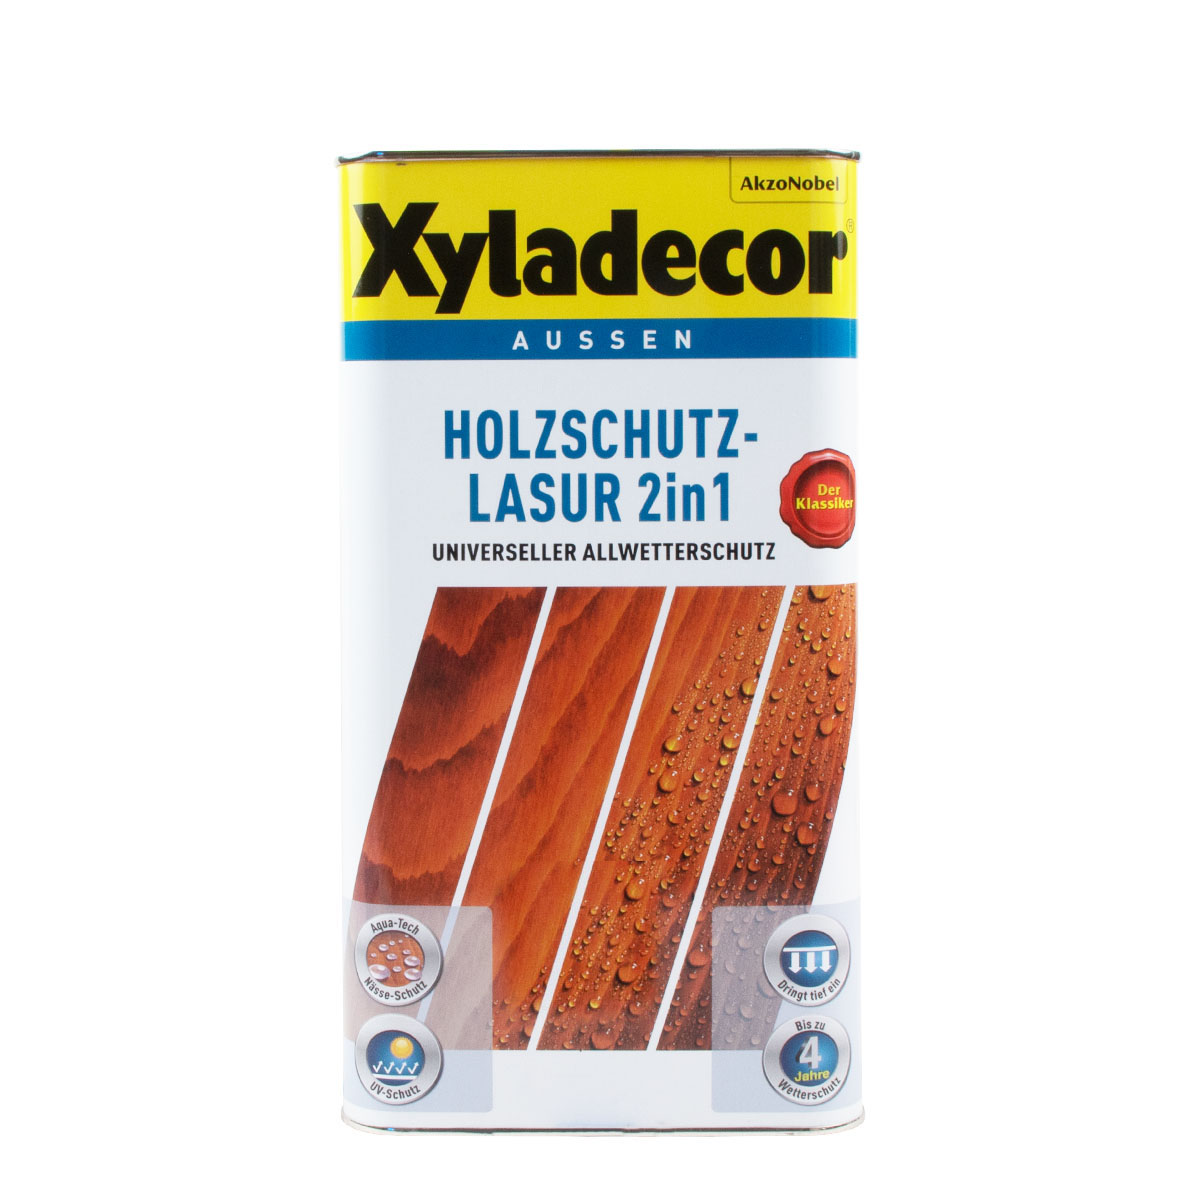 Xyladecor Holzschutz-Lasur 2in1 5L kastanie